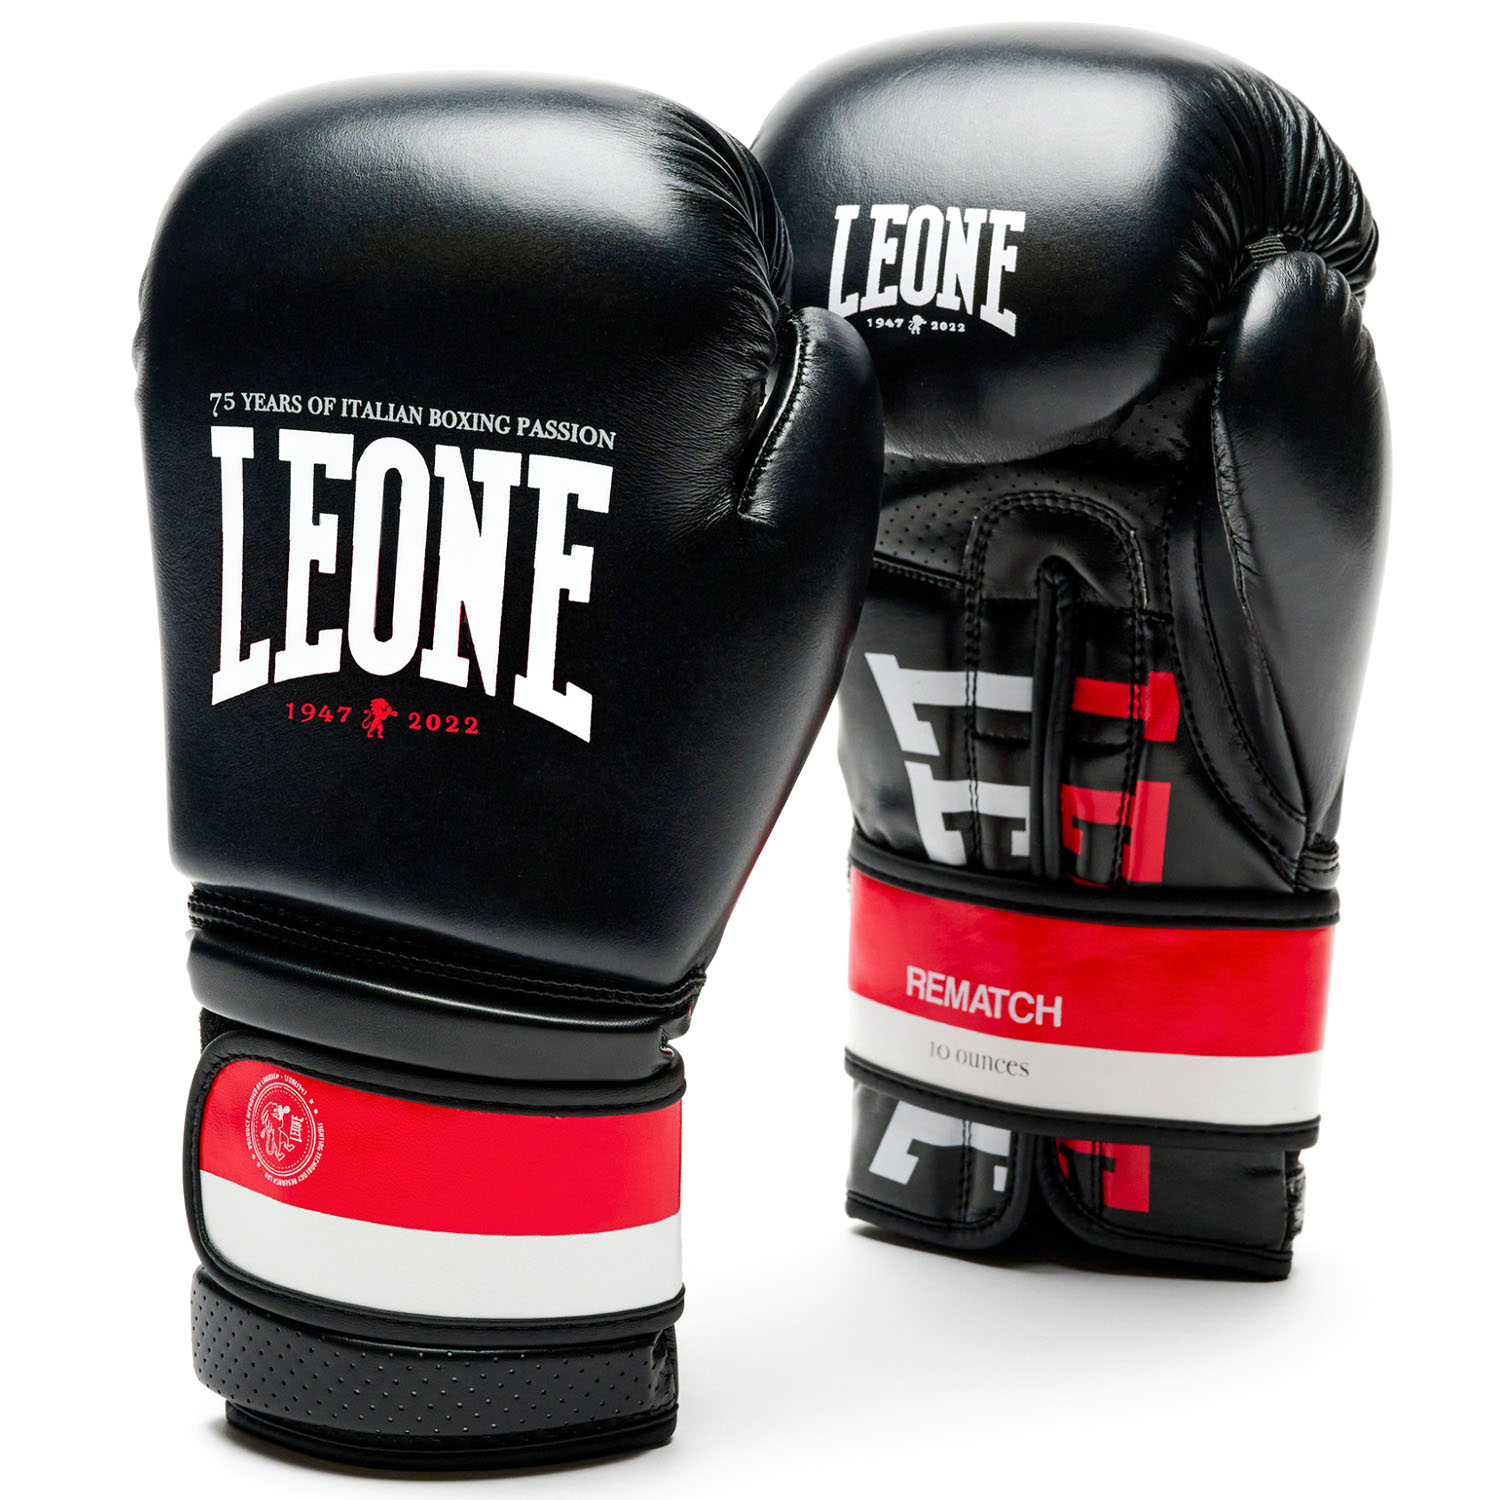 LEONE Boxing Gloves, Rematch, GN332,, black, 10 Oz